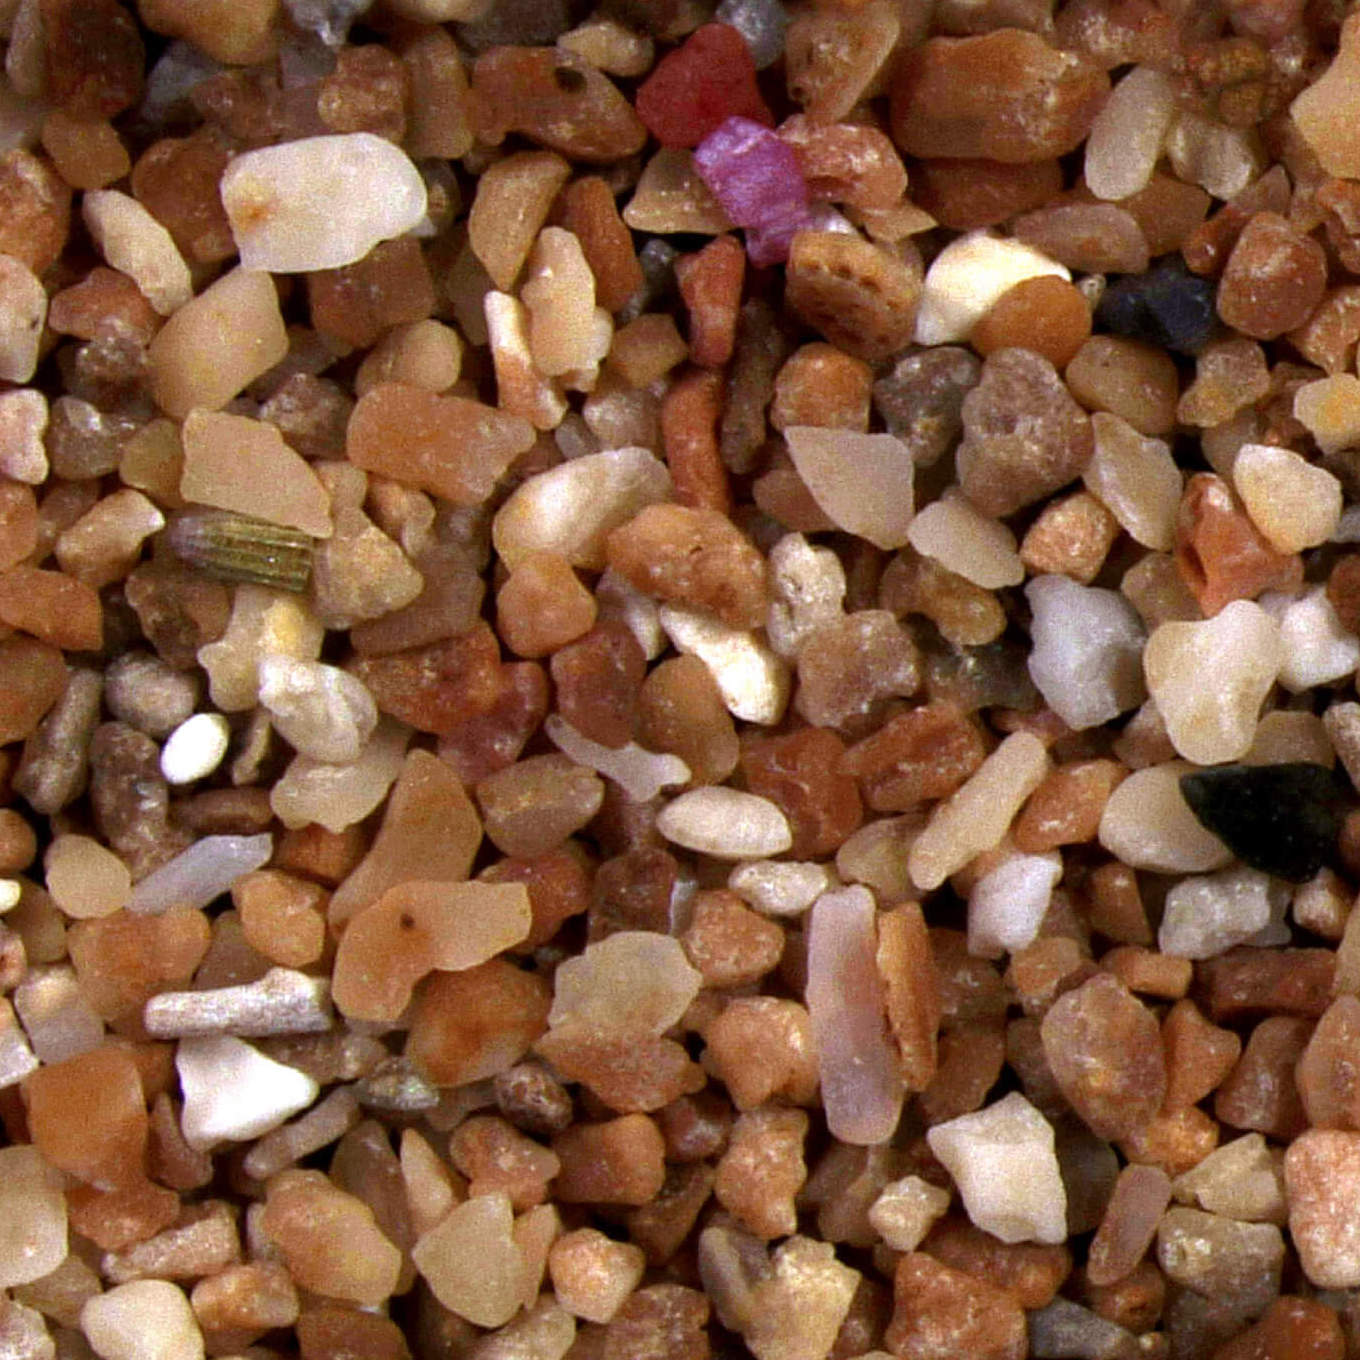 Gozo Ramla Malta Sand Grains Magnified Under Microscope Featured